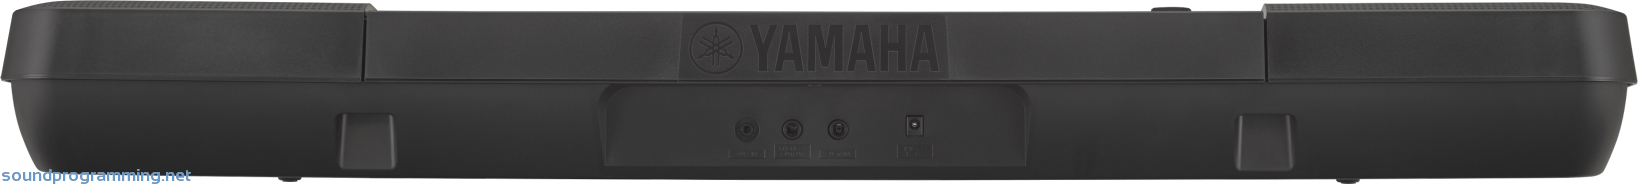 Yamaha PSR-E253 Back View